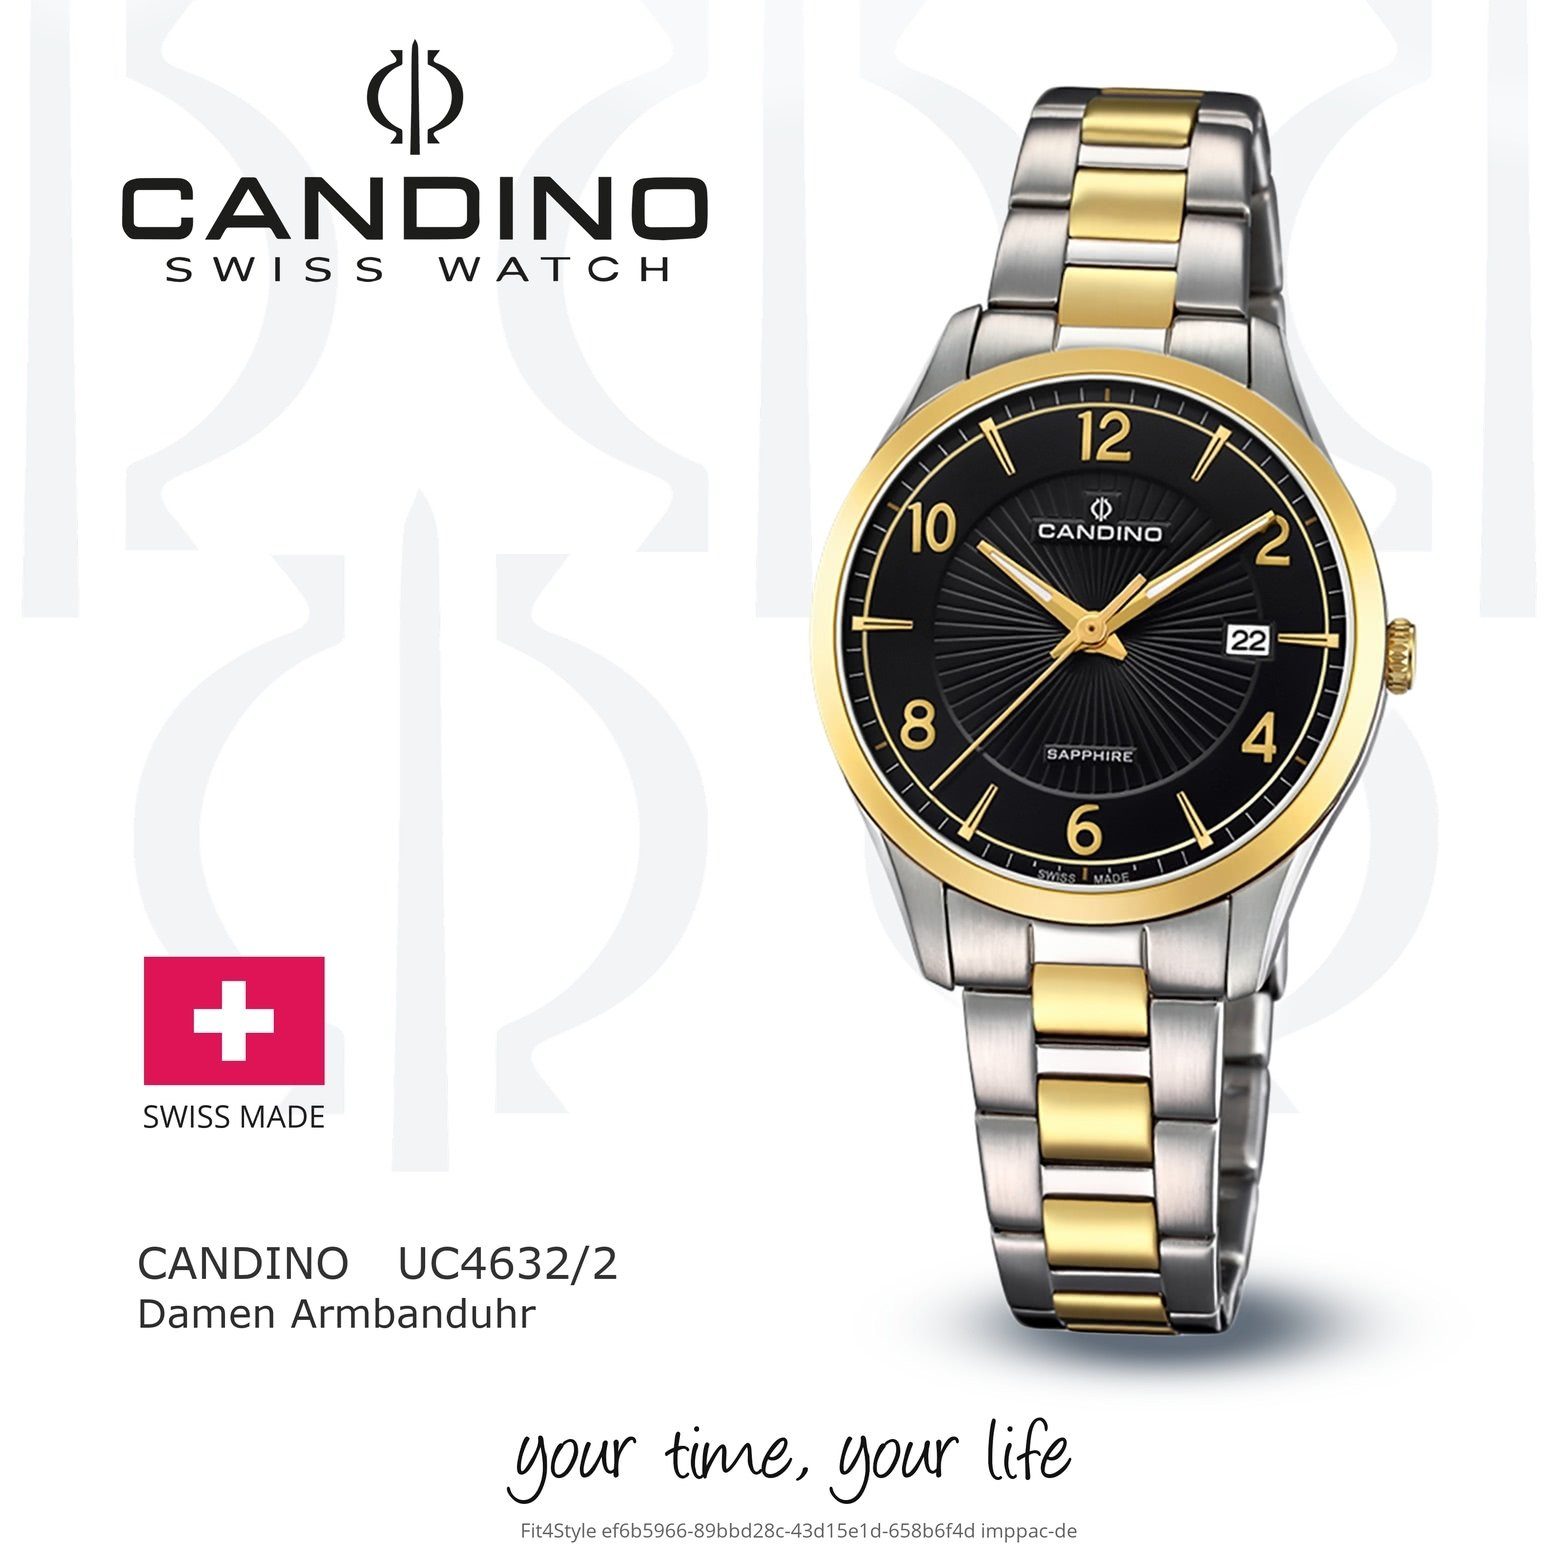 Edelstahlarmband Armbanduhr Damen C4632/2, Damen silber, Analog Uhr Candino rund, Candino gold, Elegant Quarzuhr